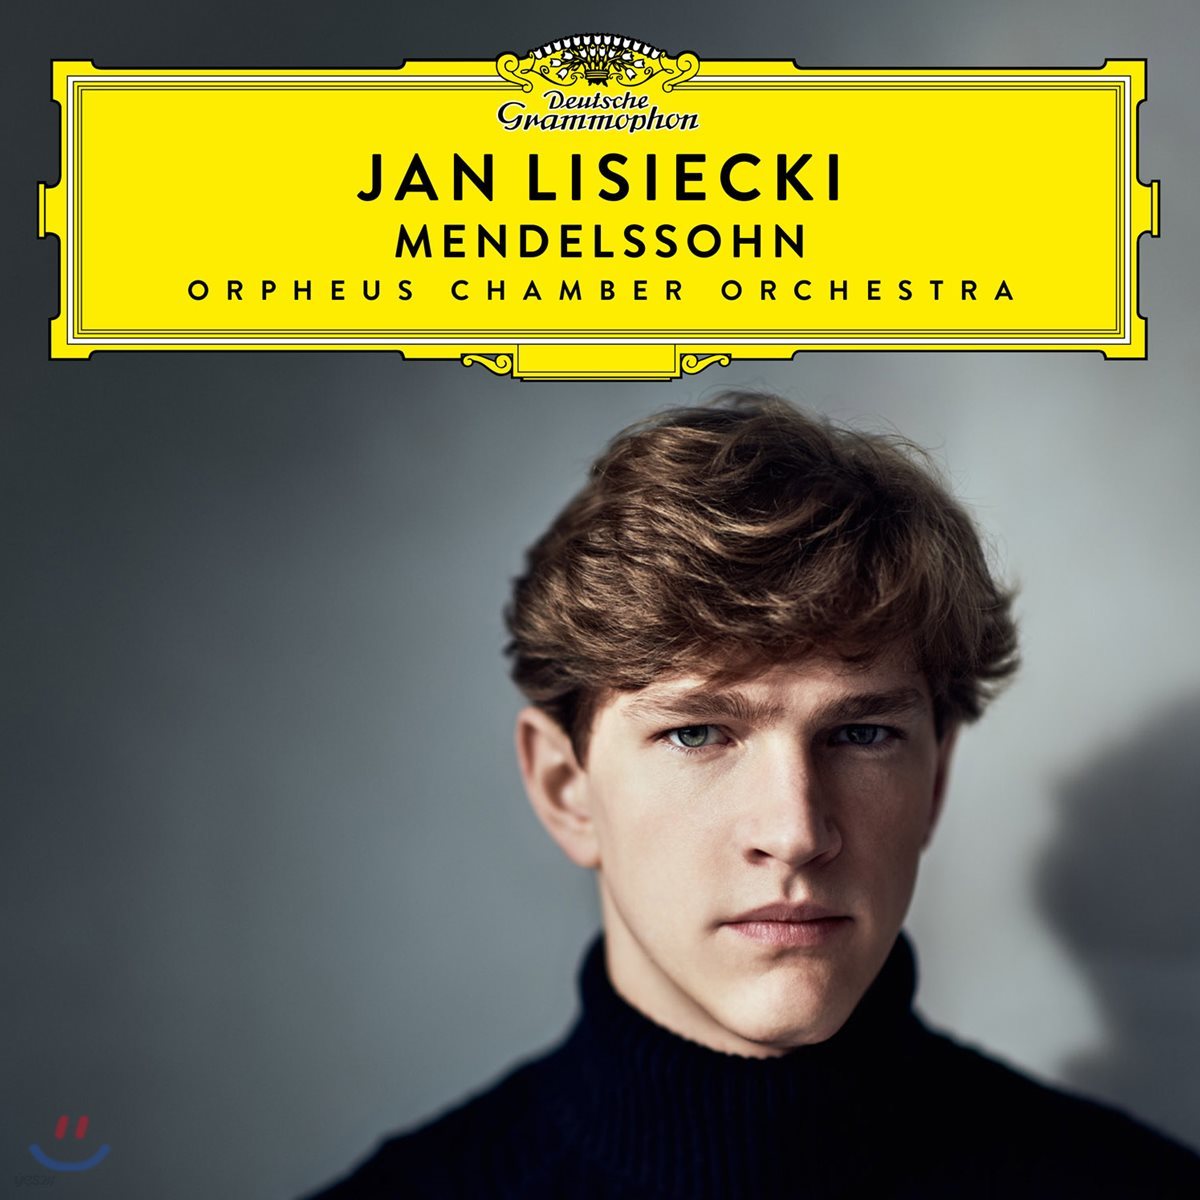 Jan Lisiecki 멘델스존: 피아노 협주곡 1, 2번, 엄격변주곡 (Mendelssohn: Piano Concertos)